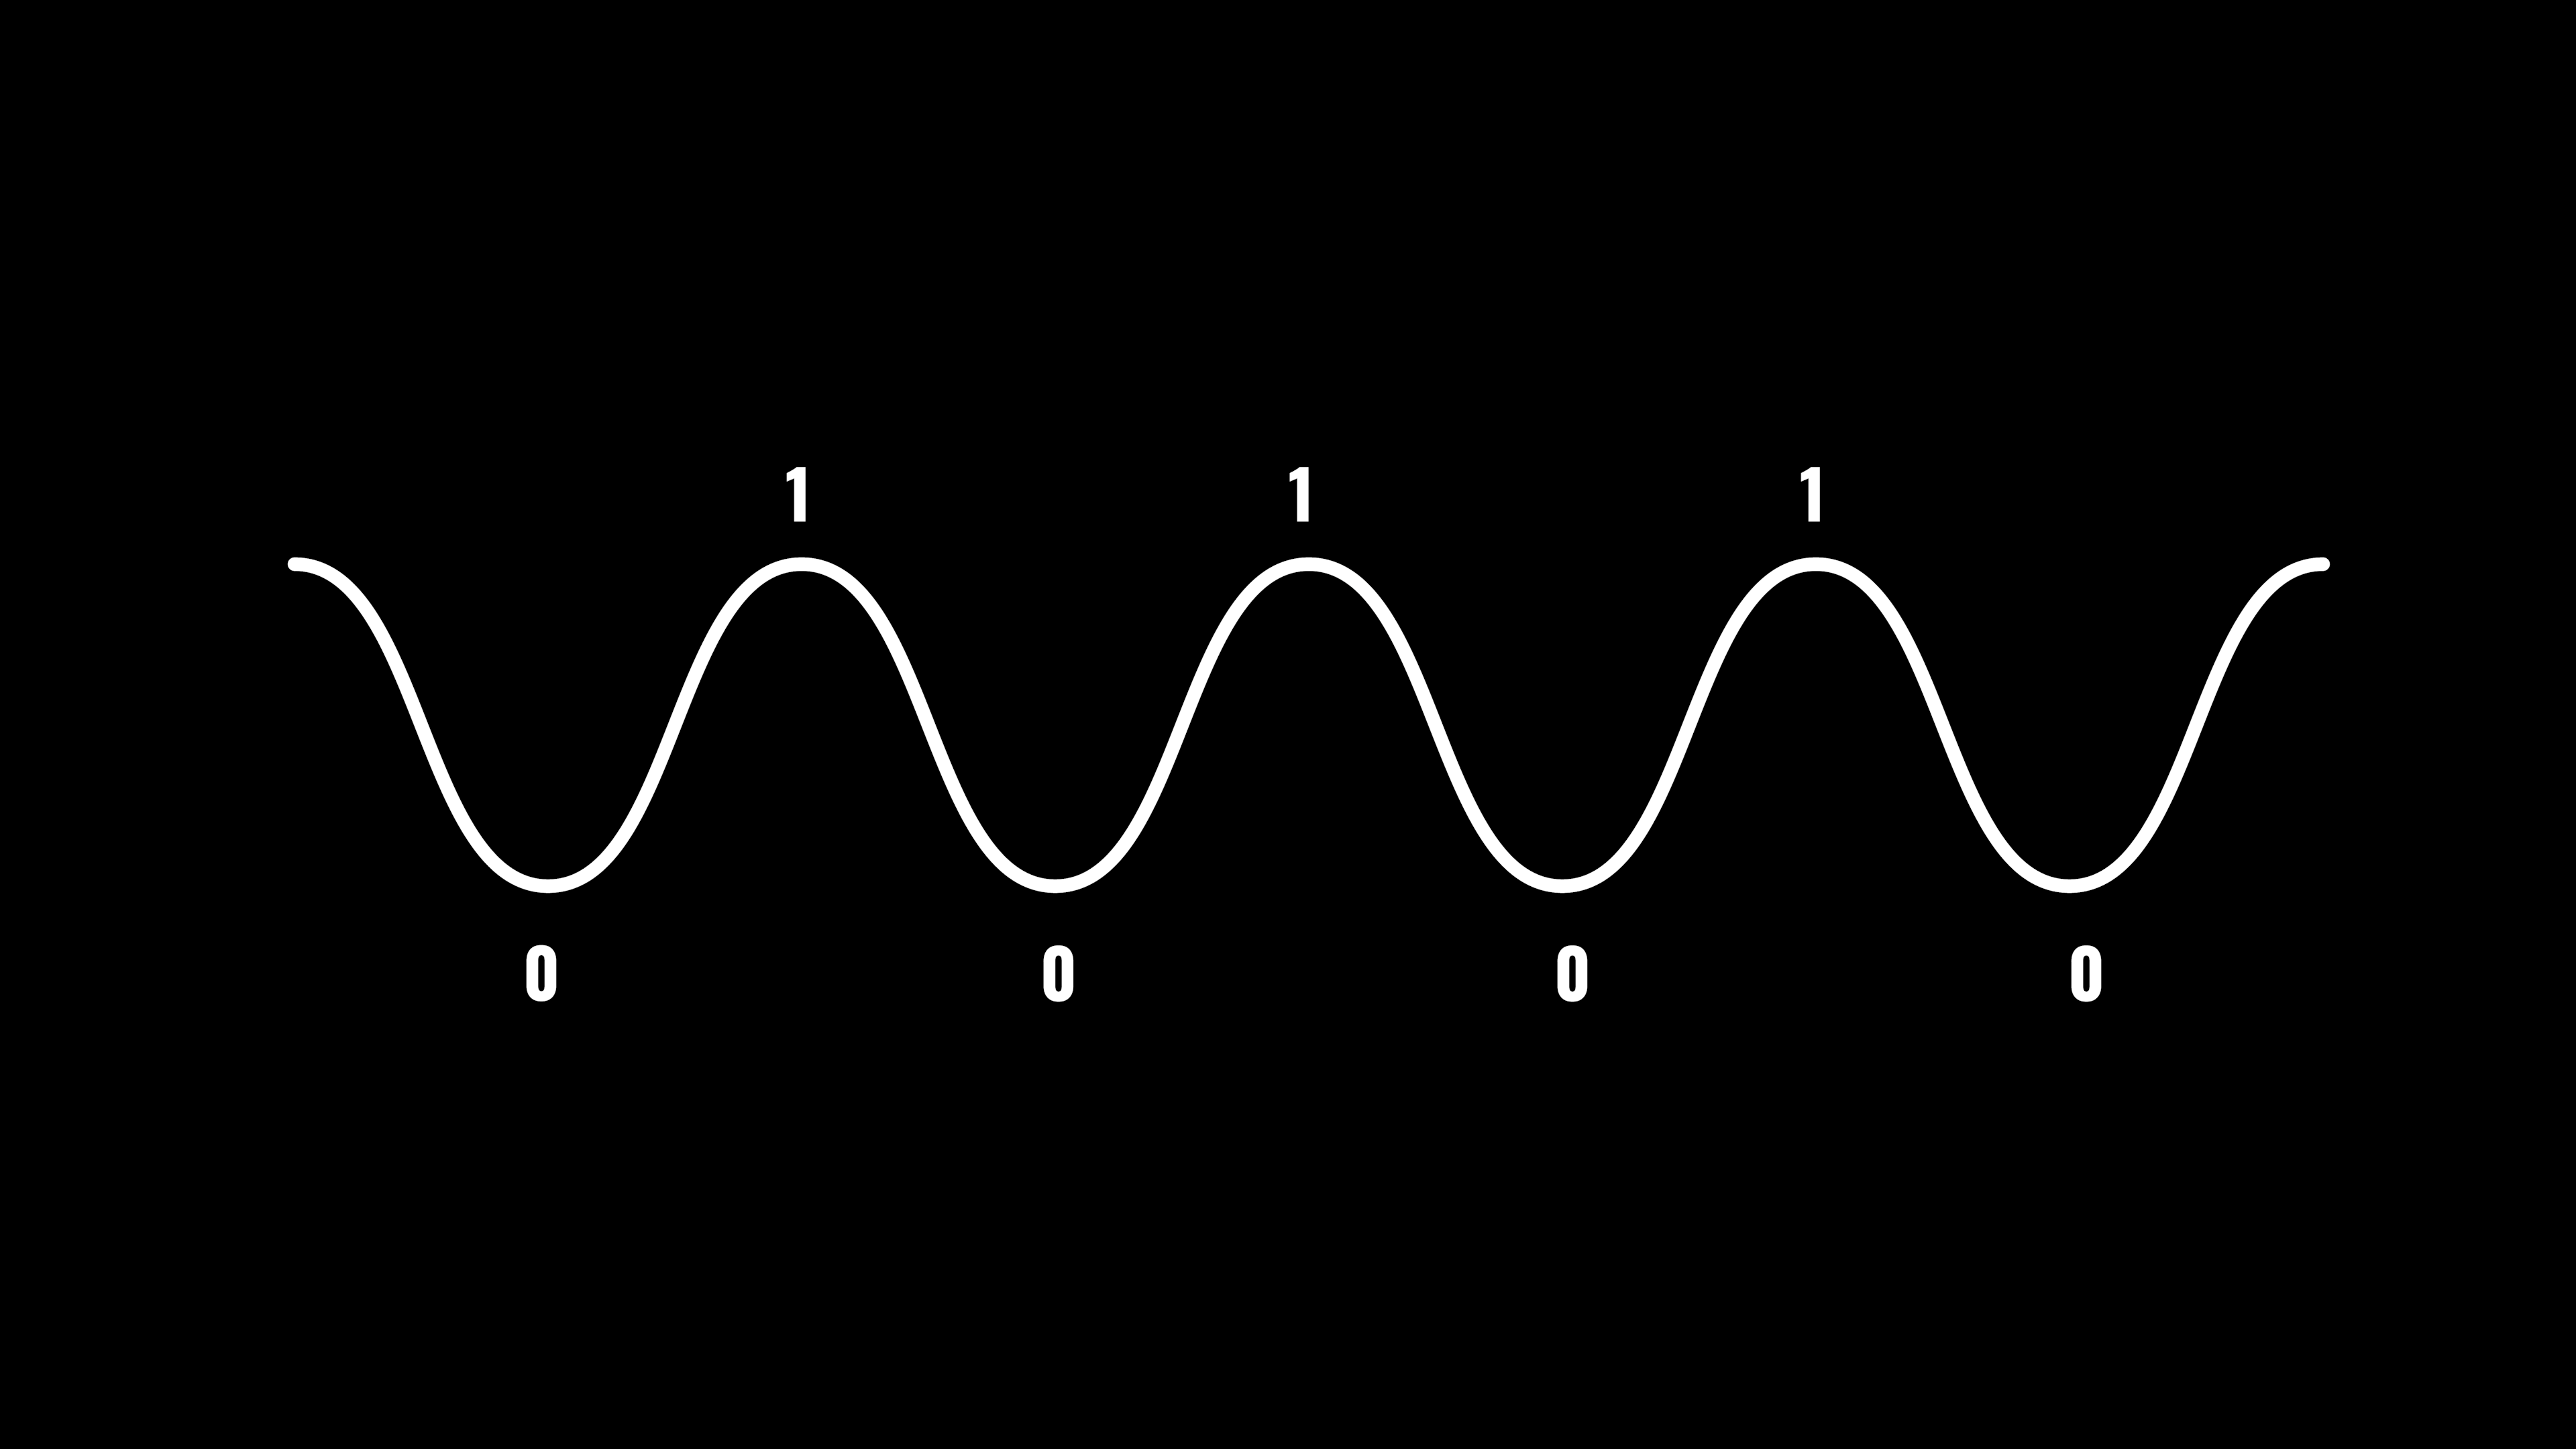 An Analog Signal Converted into a Digital Signal